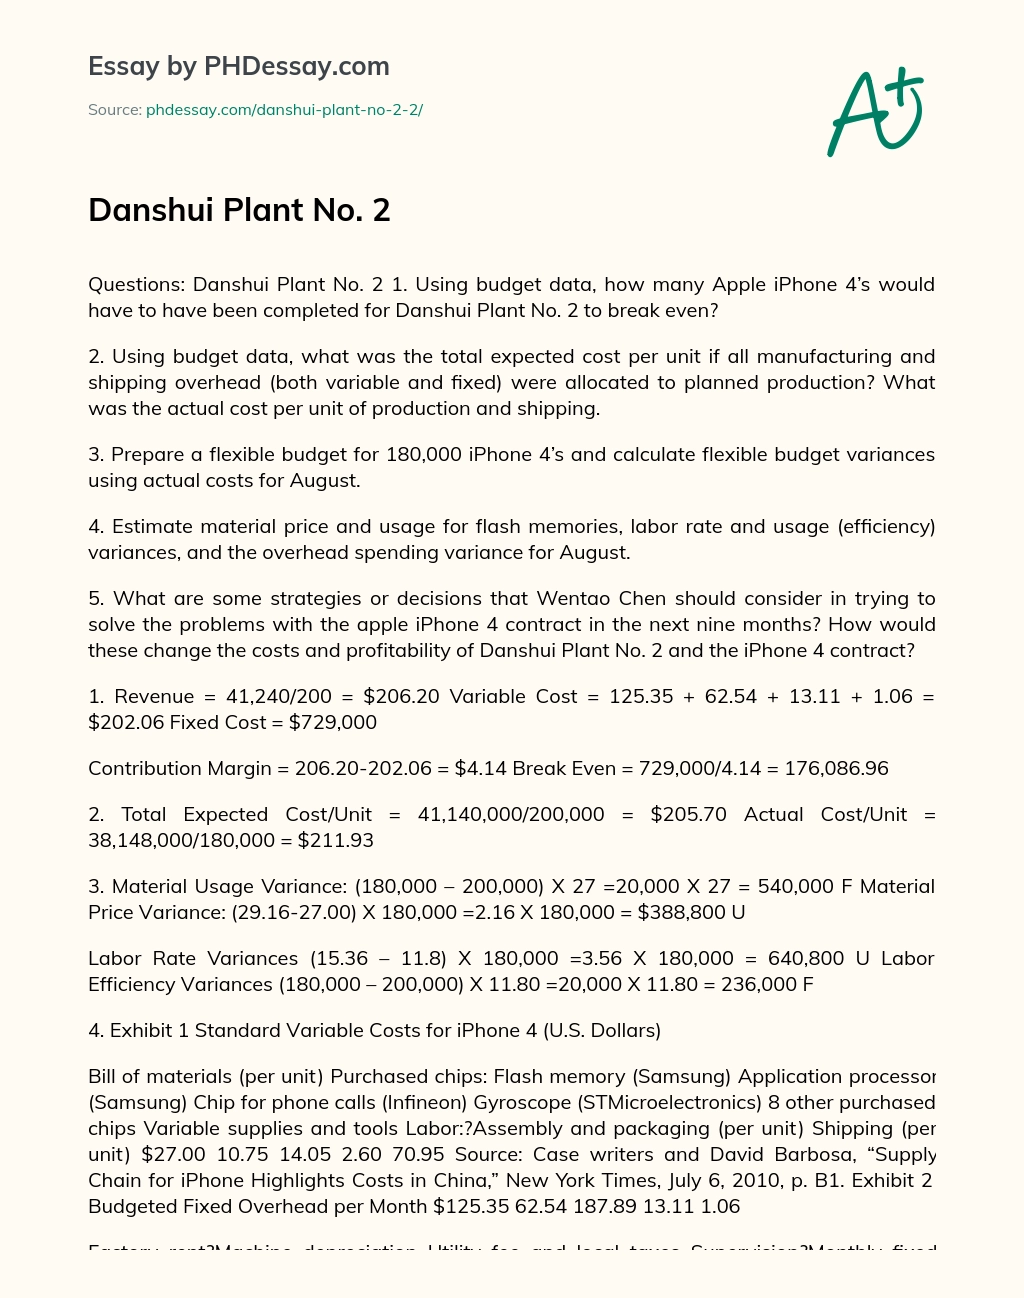 Danshui Plant No. 2 essay